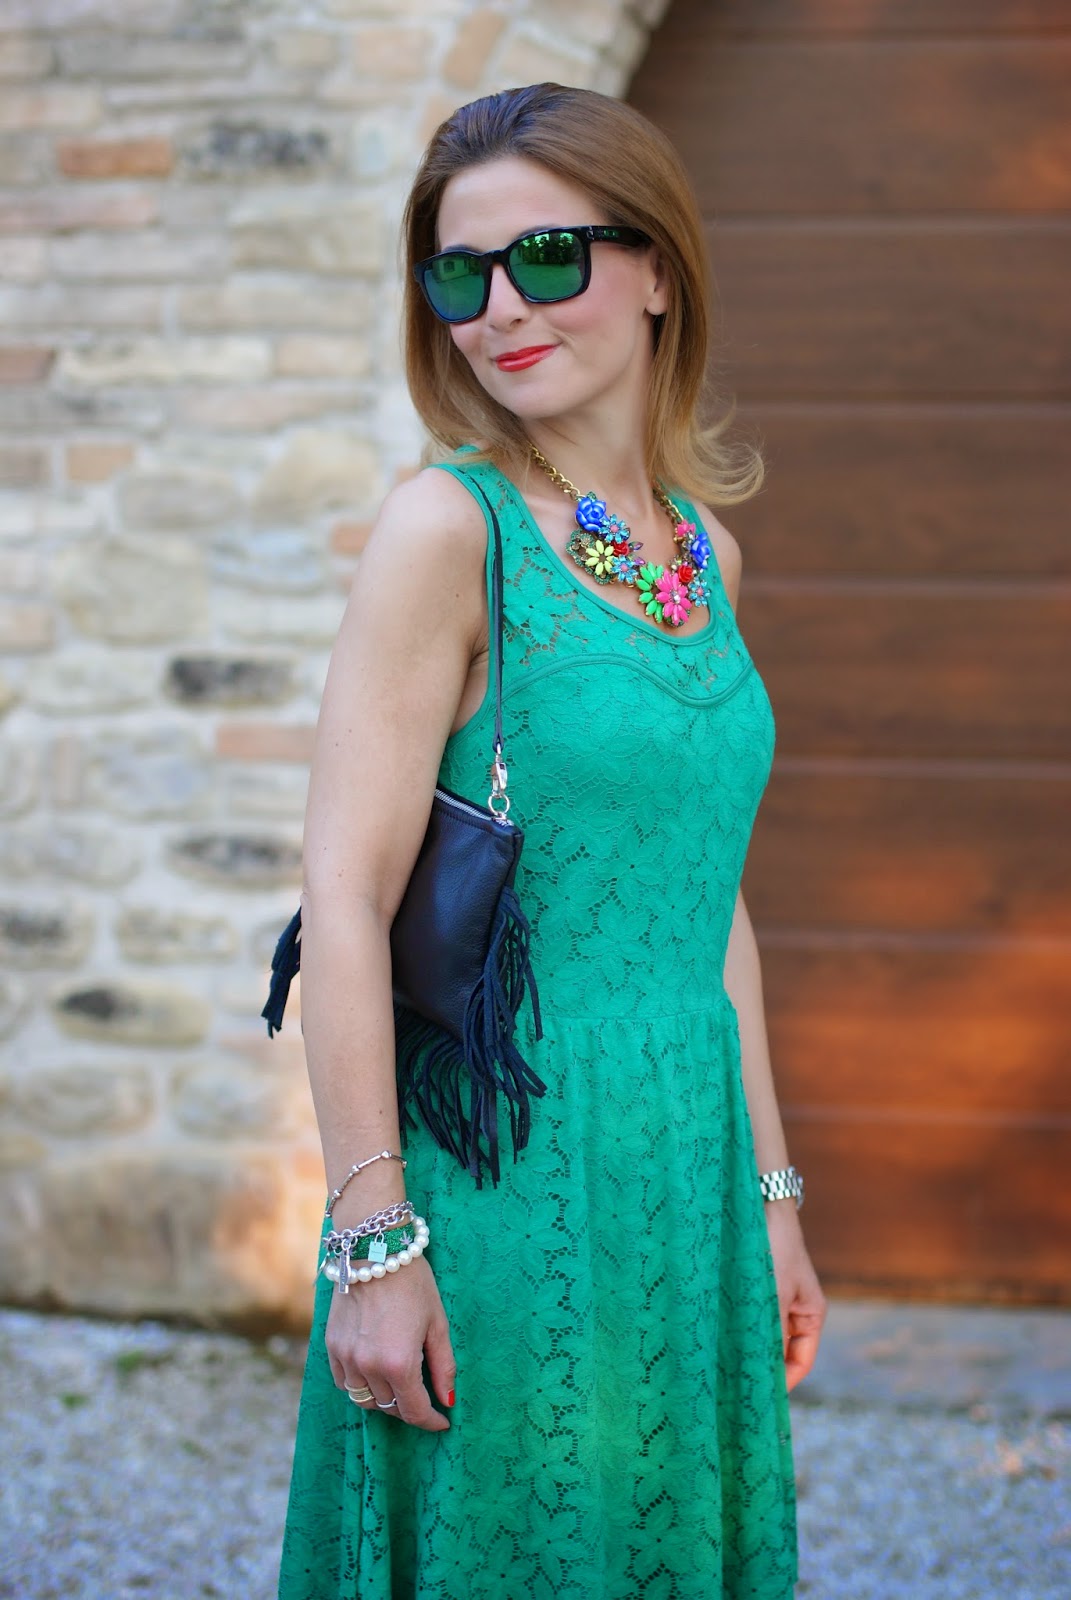 Morgan de toi lace dress, bob hat, oakley green sunglasses, Fashion and Cookies, fashion blogger